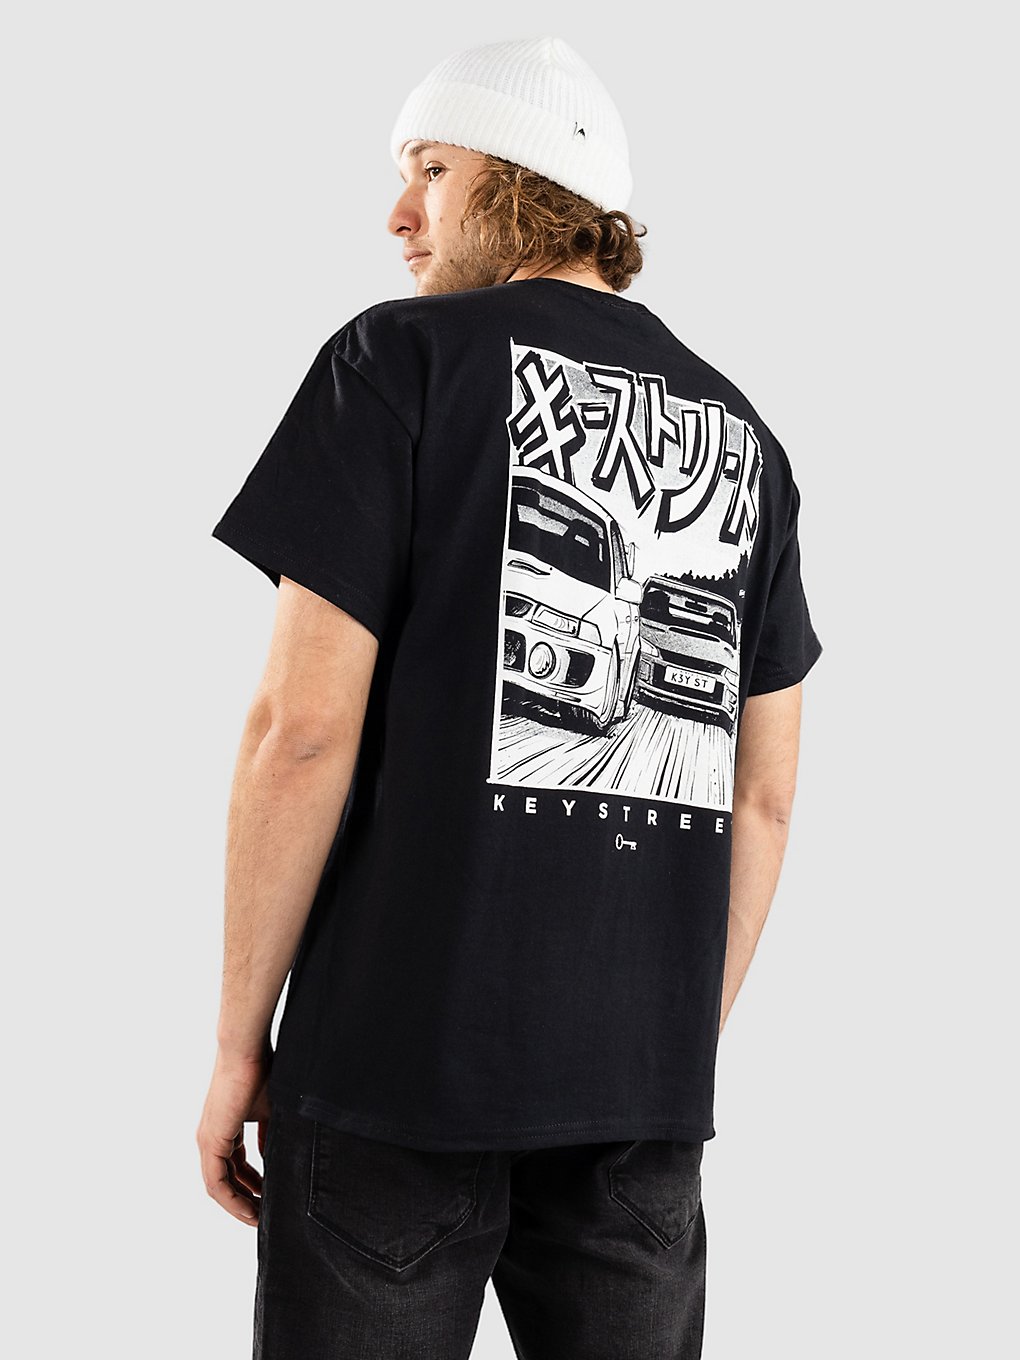 Key Street Versus II T-Shirt black kaufen